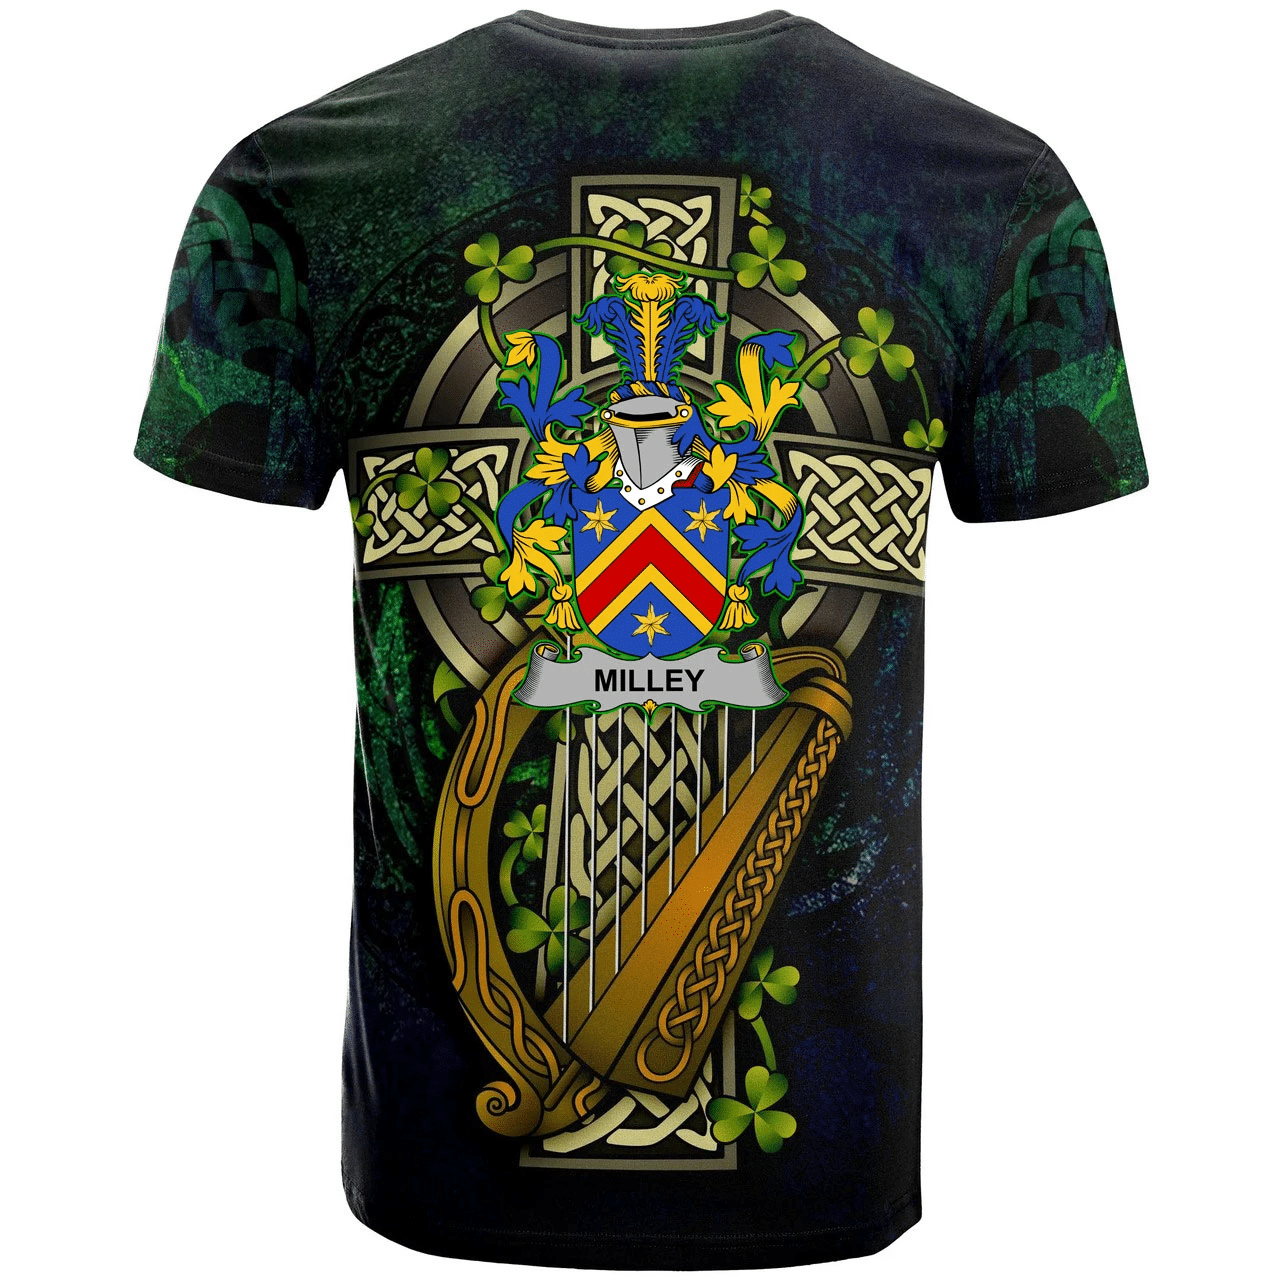 1stireland Ireland T-Shirt - Milley or O'Millea Irish with Celtic Cross Tee - Irish Family Crest A7 | 1stScotland.com